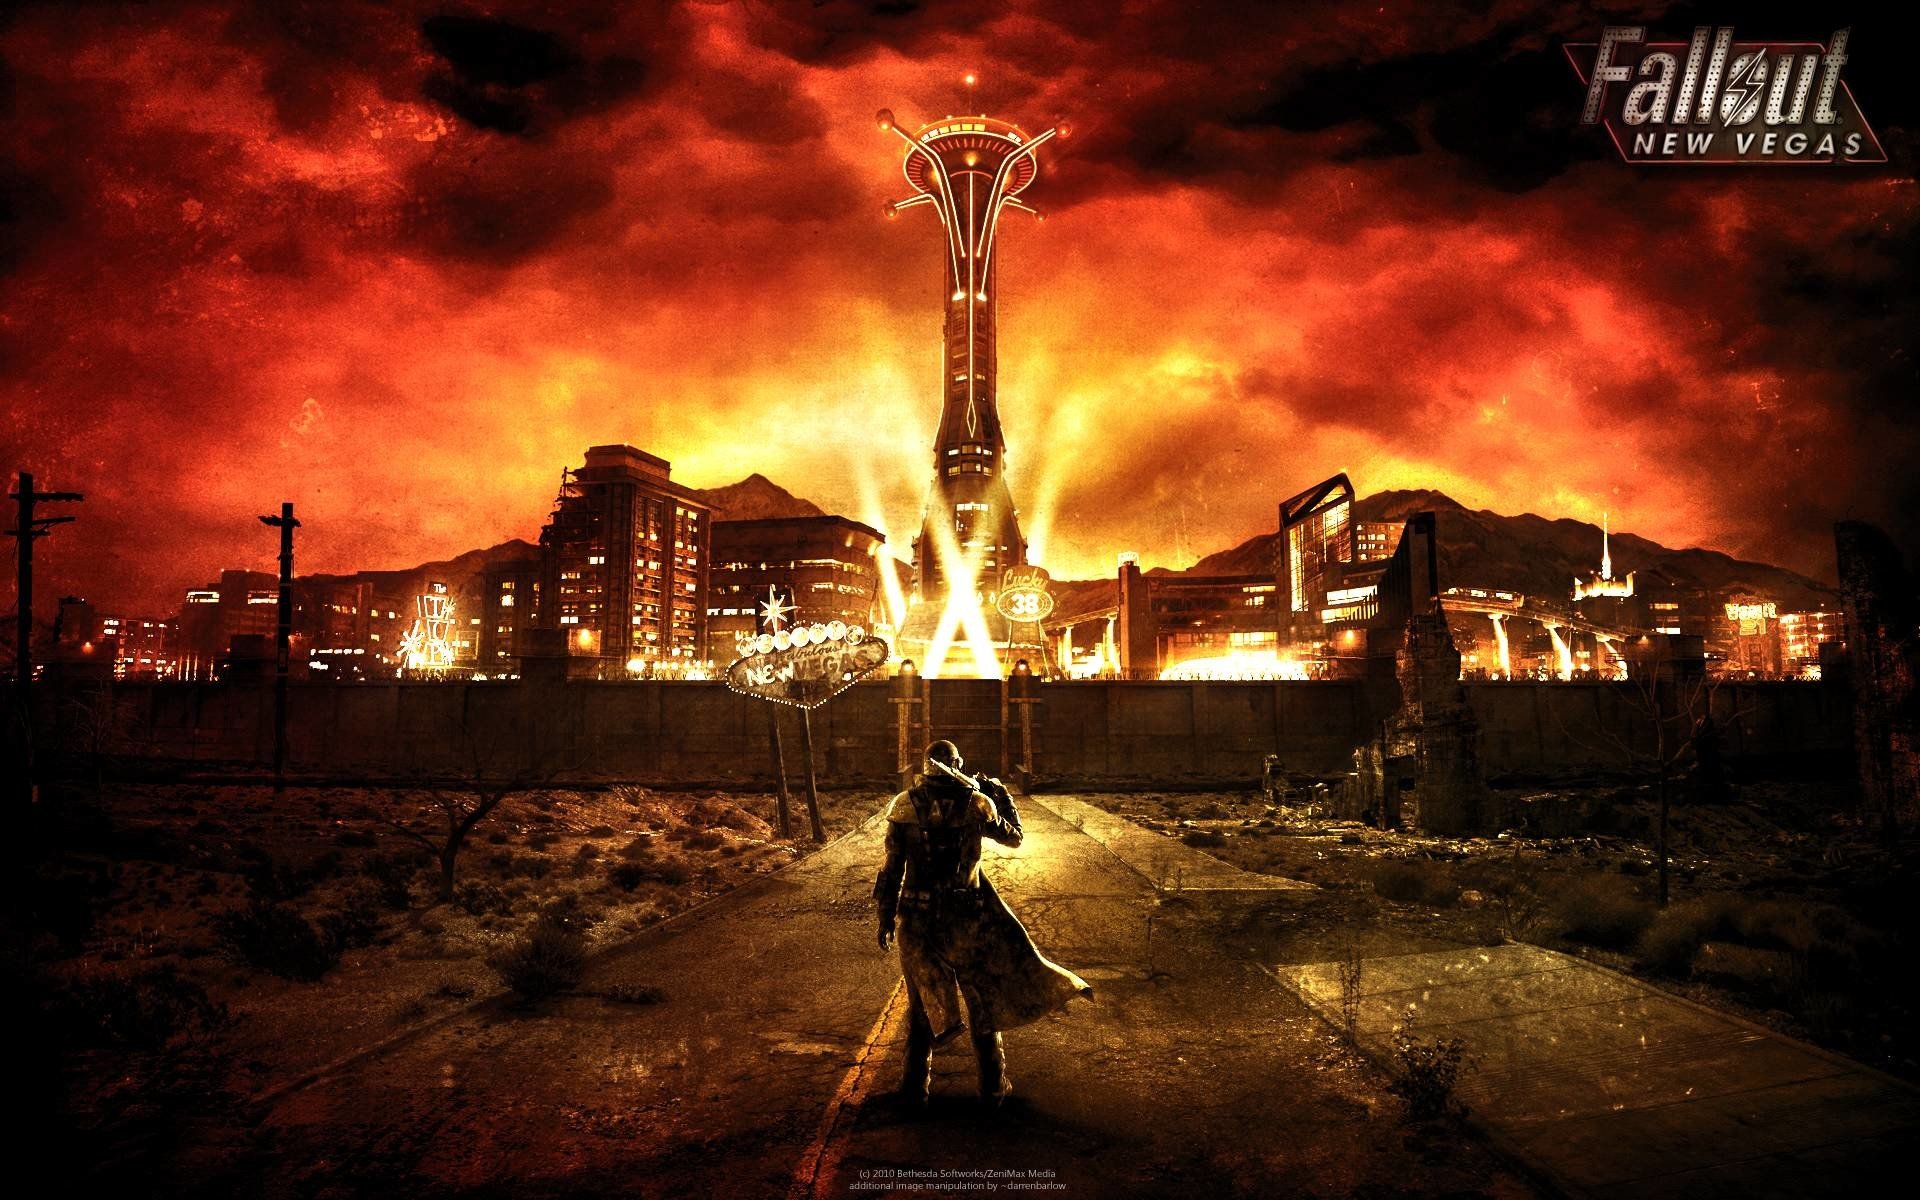 58+] Fallout New Vegas Backgrounds on WallpaperSafari